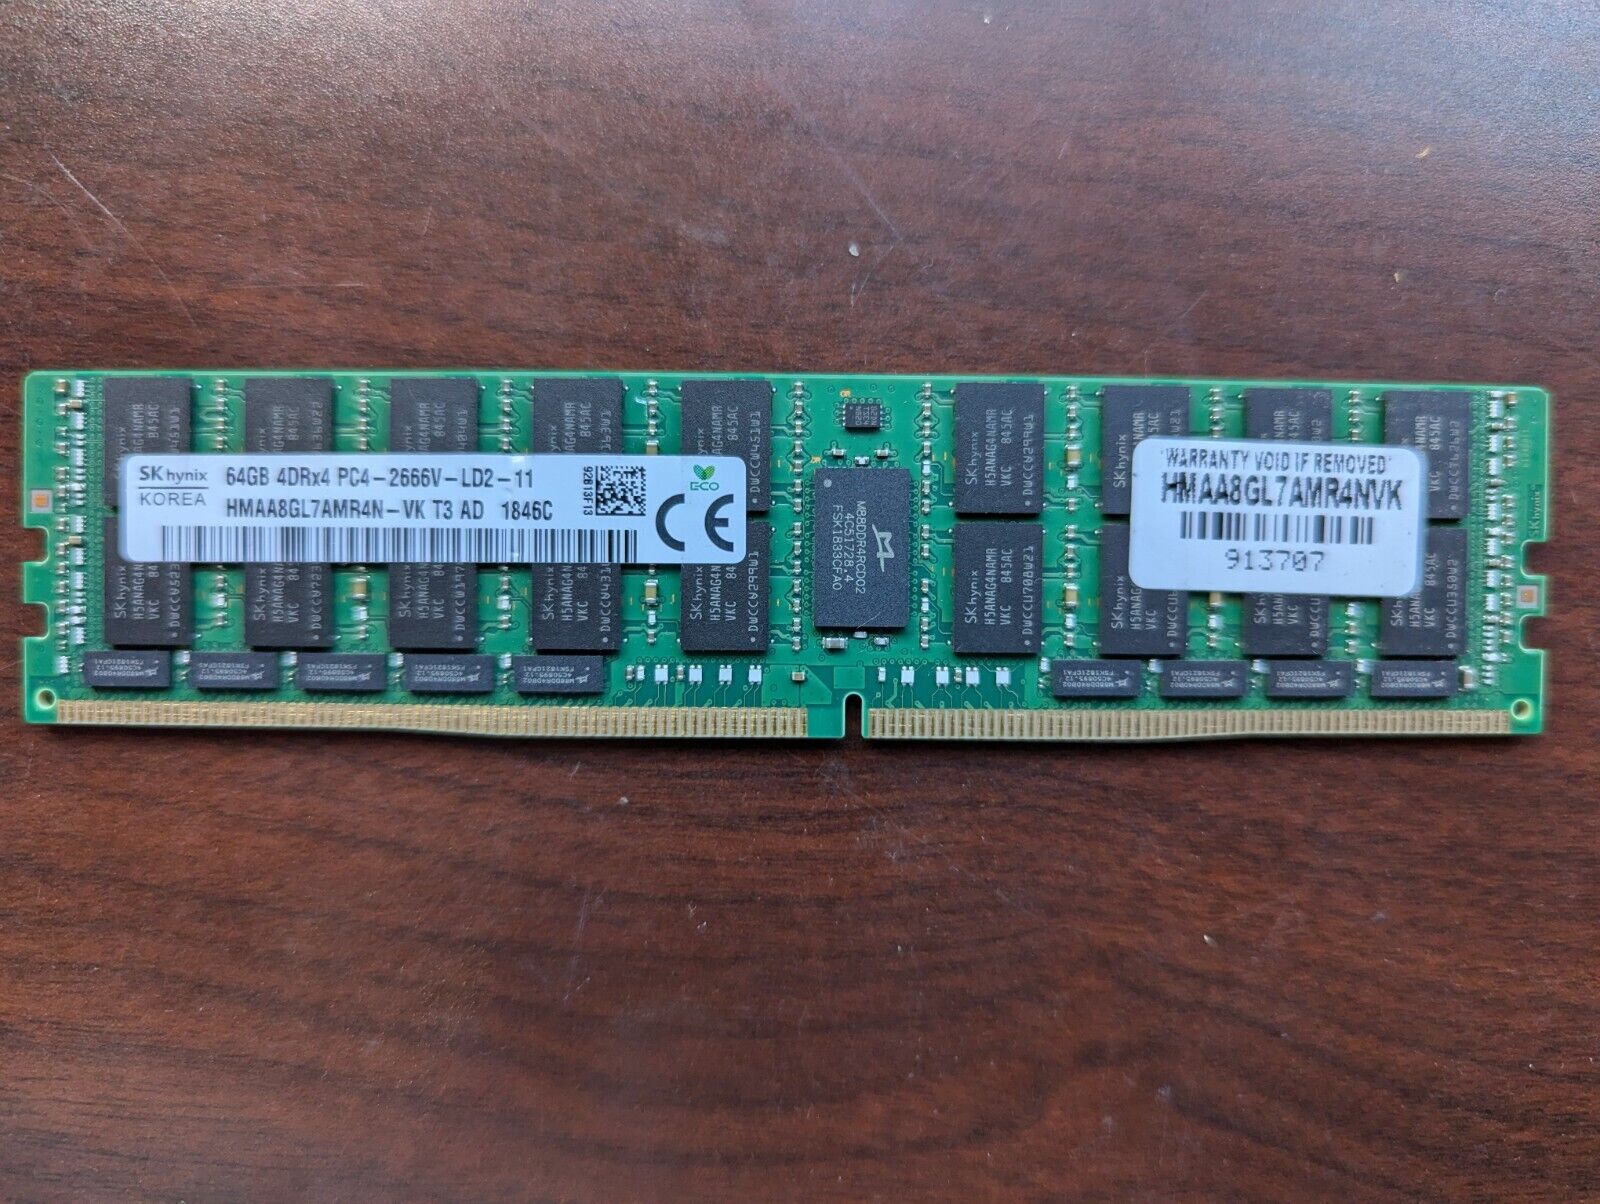 SK Hynix 64GB 4DRx4 PC4-2666V HMAA8GL7AMR4N-VK Server Memory